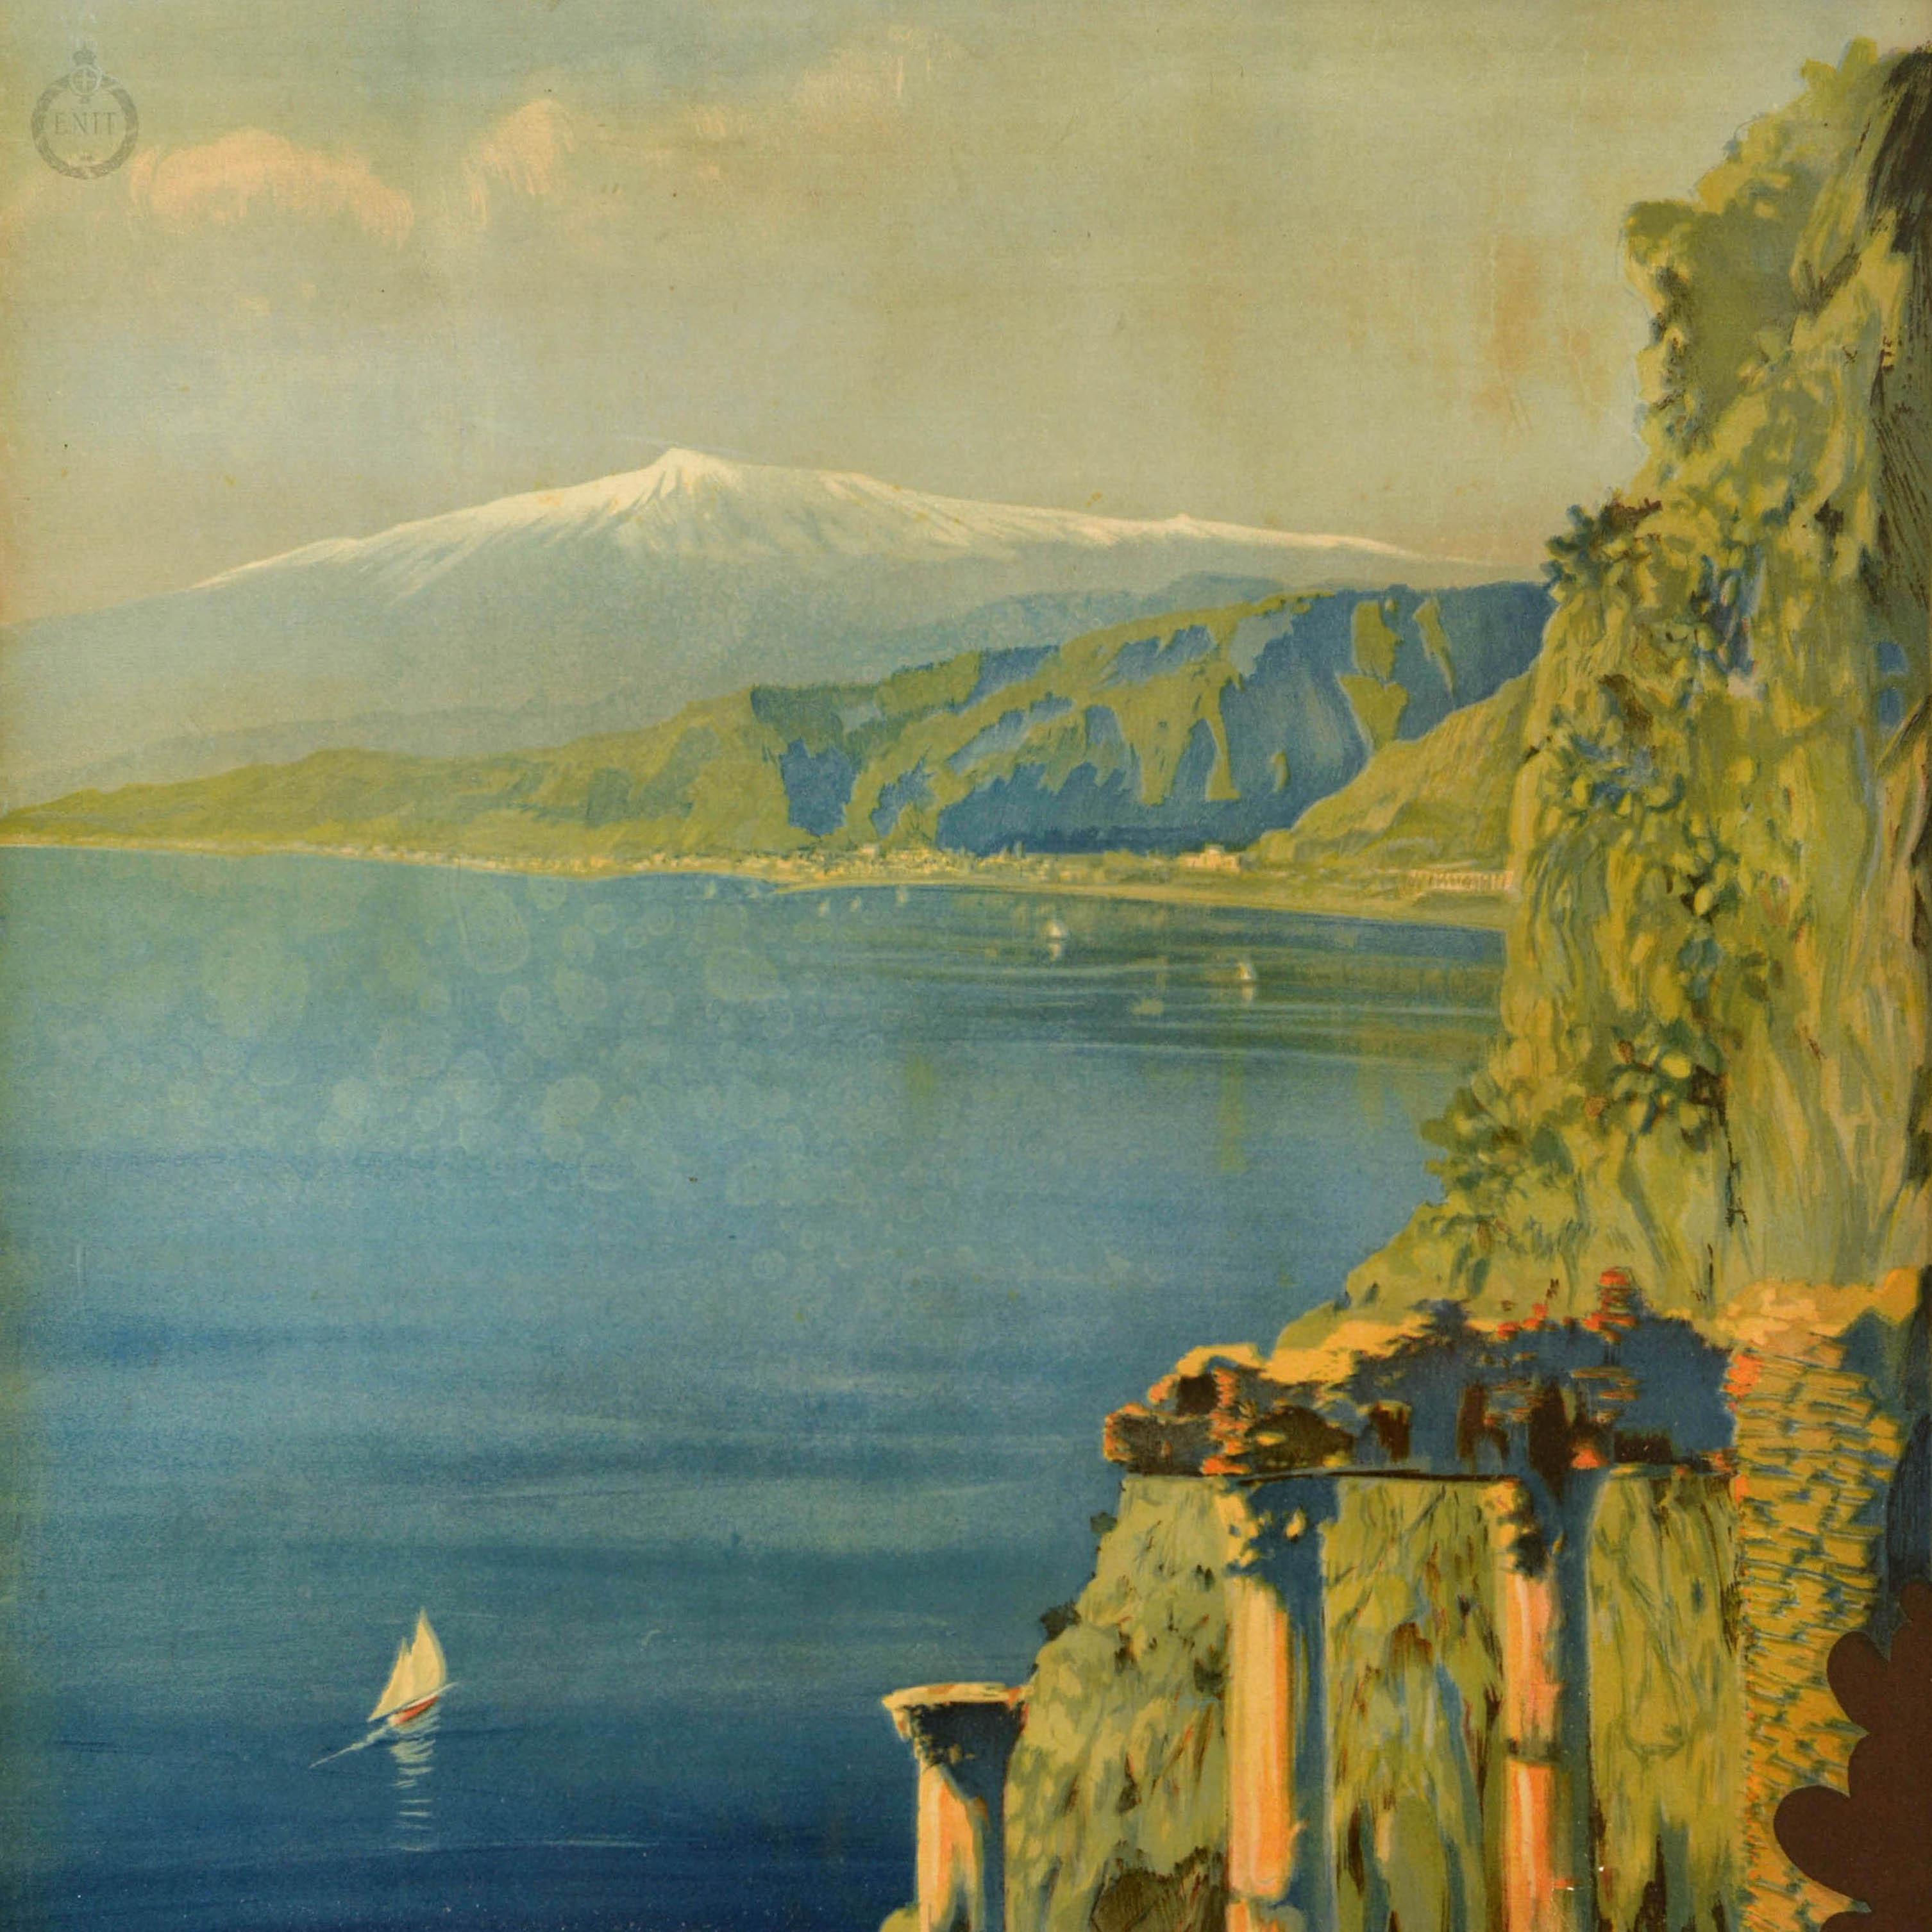 Italian Original Vintage Travel Poster Taormina Sicily ENIT Italy Mt Etna Mario Borgoni For Sale